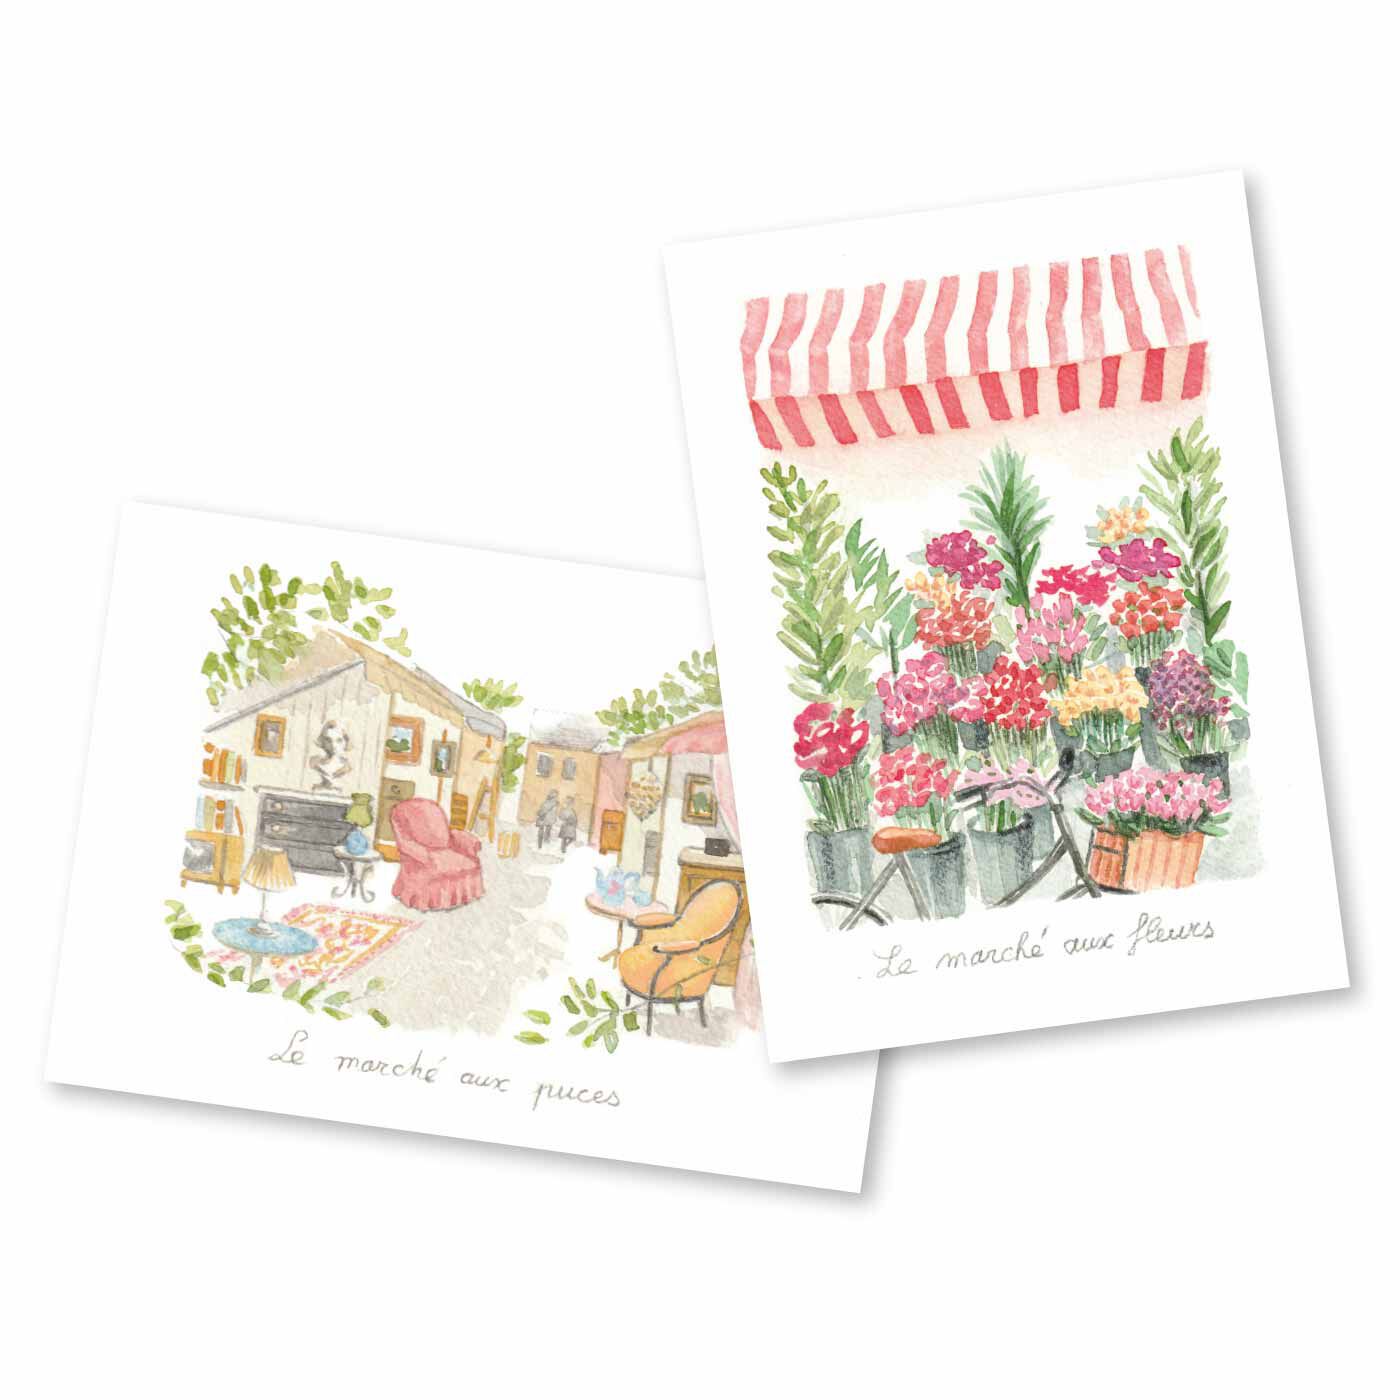 Couturier|アンヌさんが描くフランスの暮らしと四季の風景クロスステッチの会|アンヌさんオリジナルのイラストカード付き。